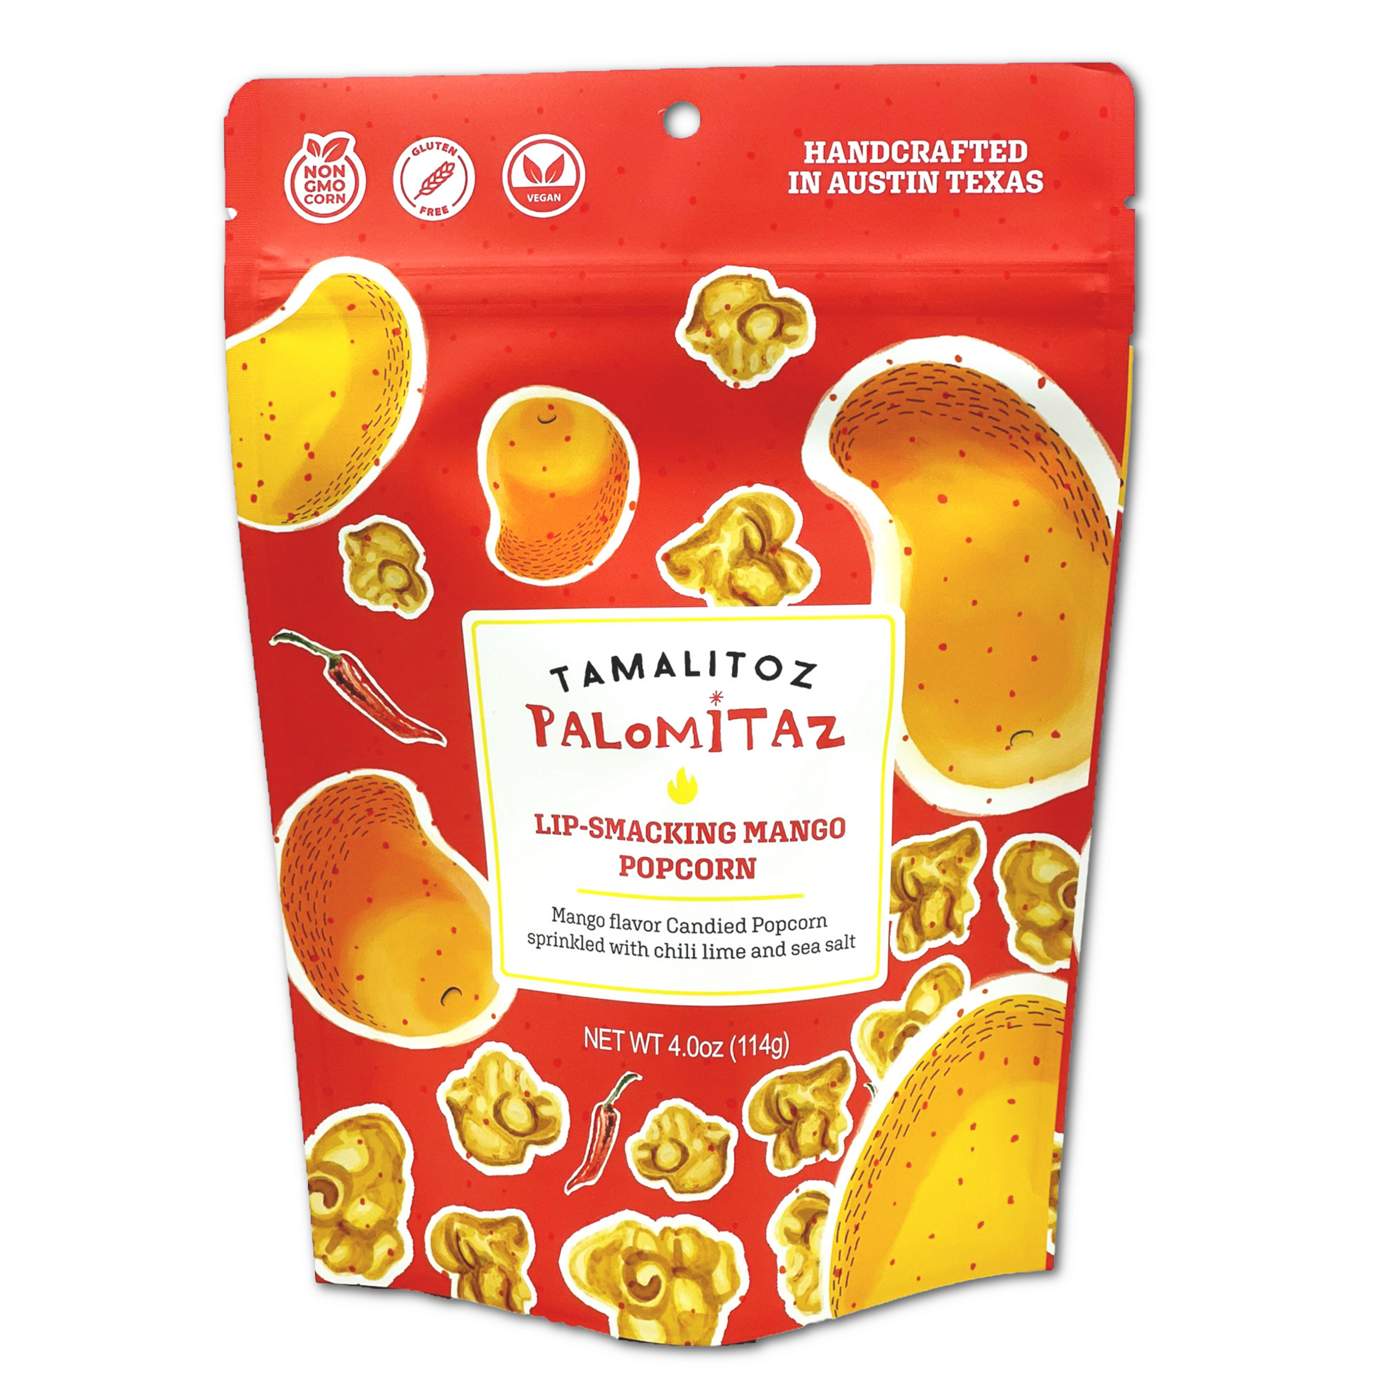 Tamalitoz by Sugarox Palomitaz Lip-Smacking Mango Kettle Popcorn; image 1 of 2